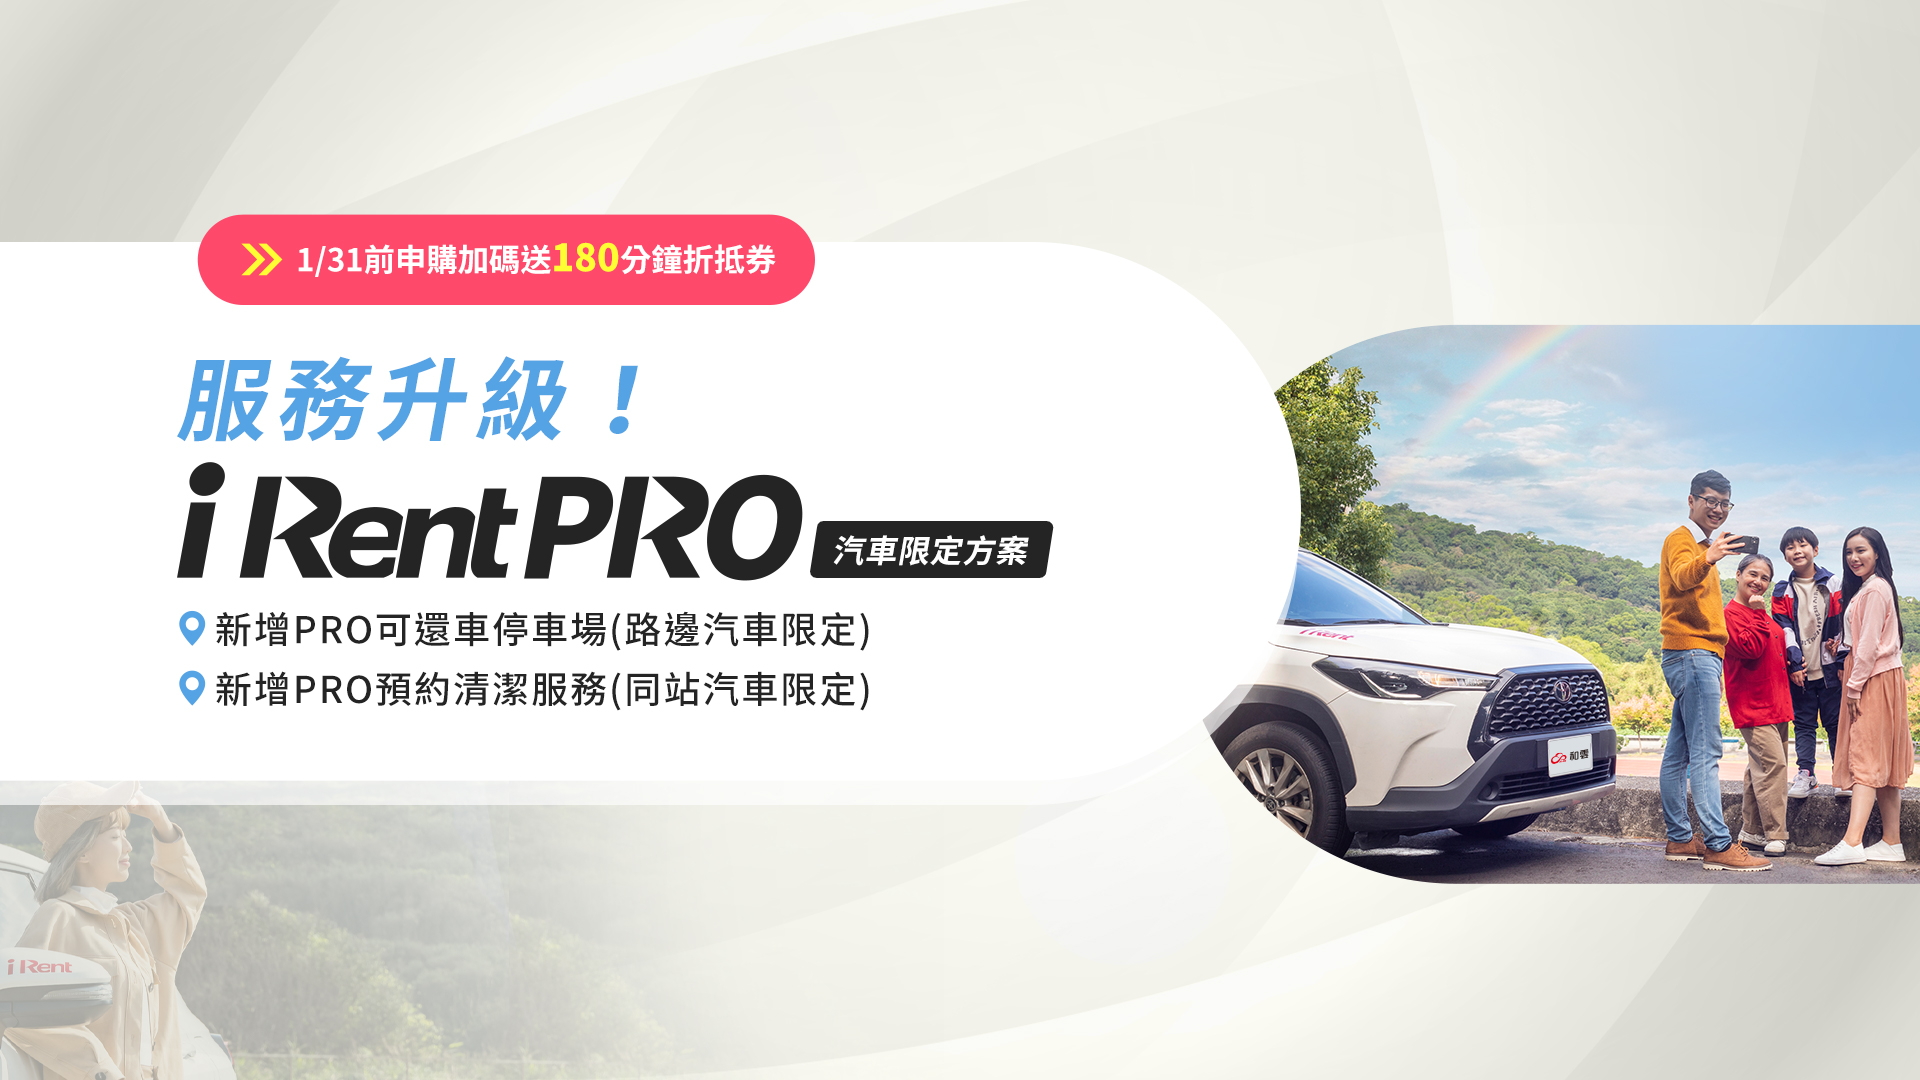 iRent PRO全新服務登場輕鬆享有汽車「還車PRO」及「清潔PRO」兩大升級服務